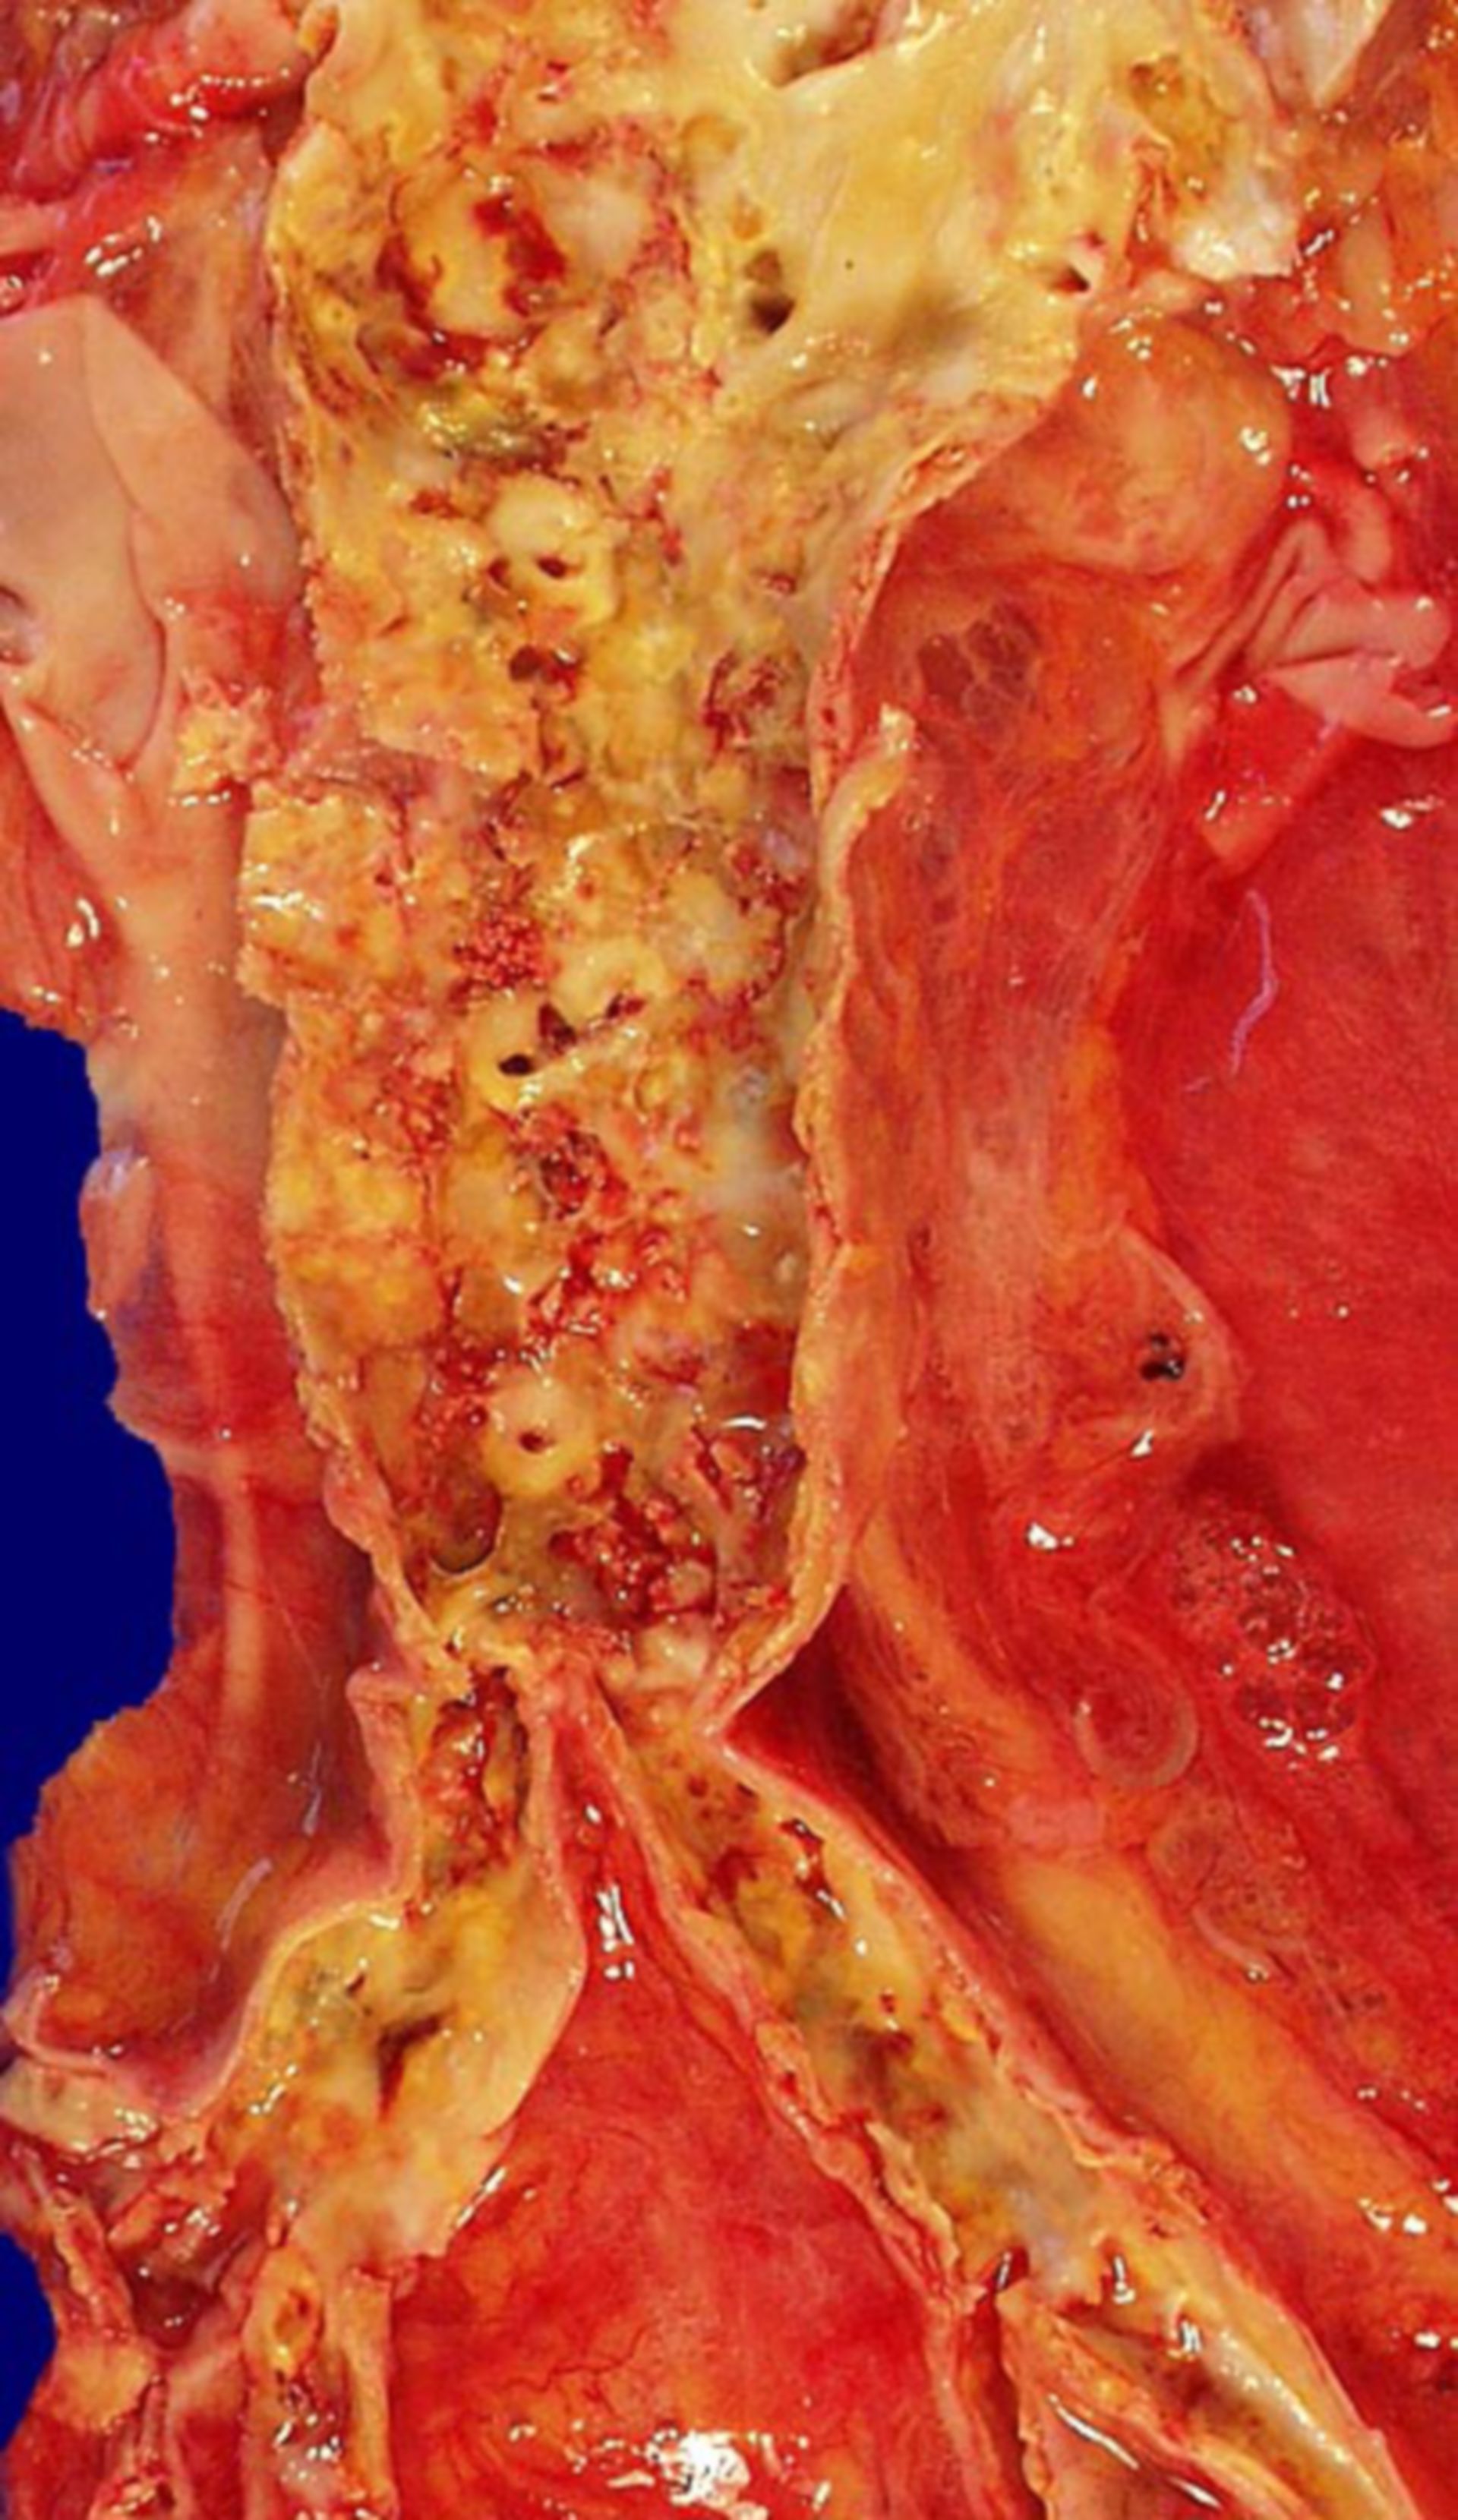 Abdominal aorta, moderate atherosclerosis